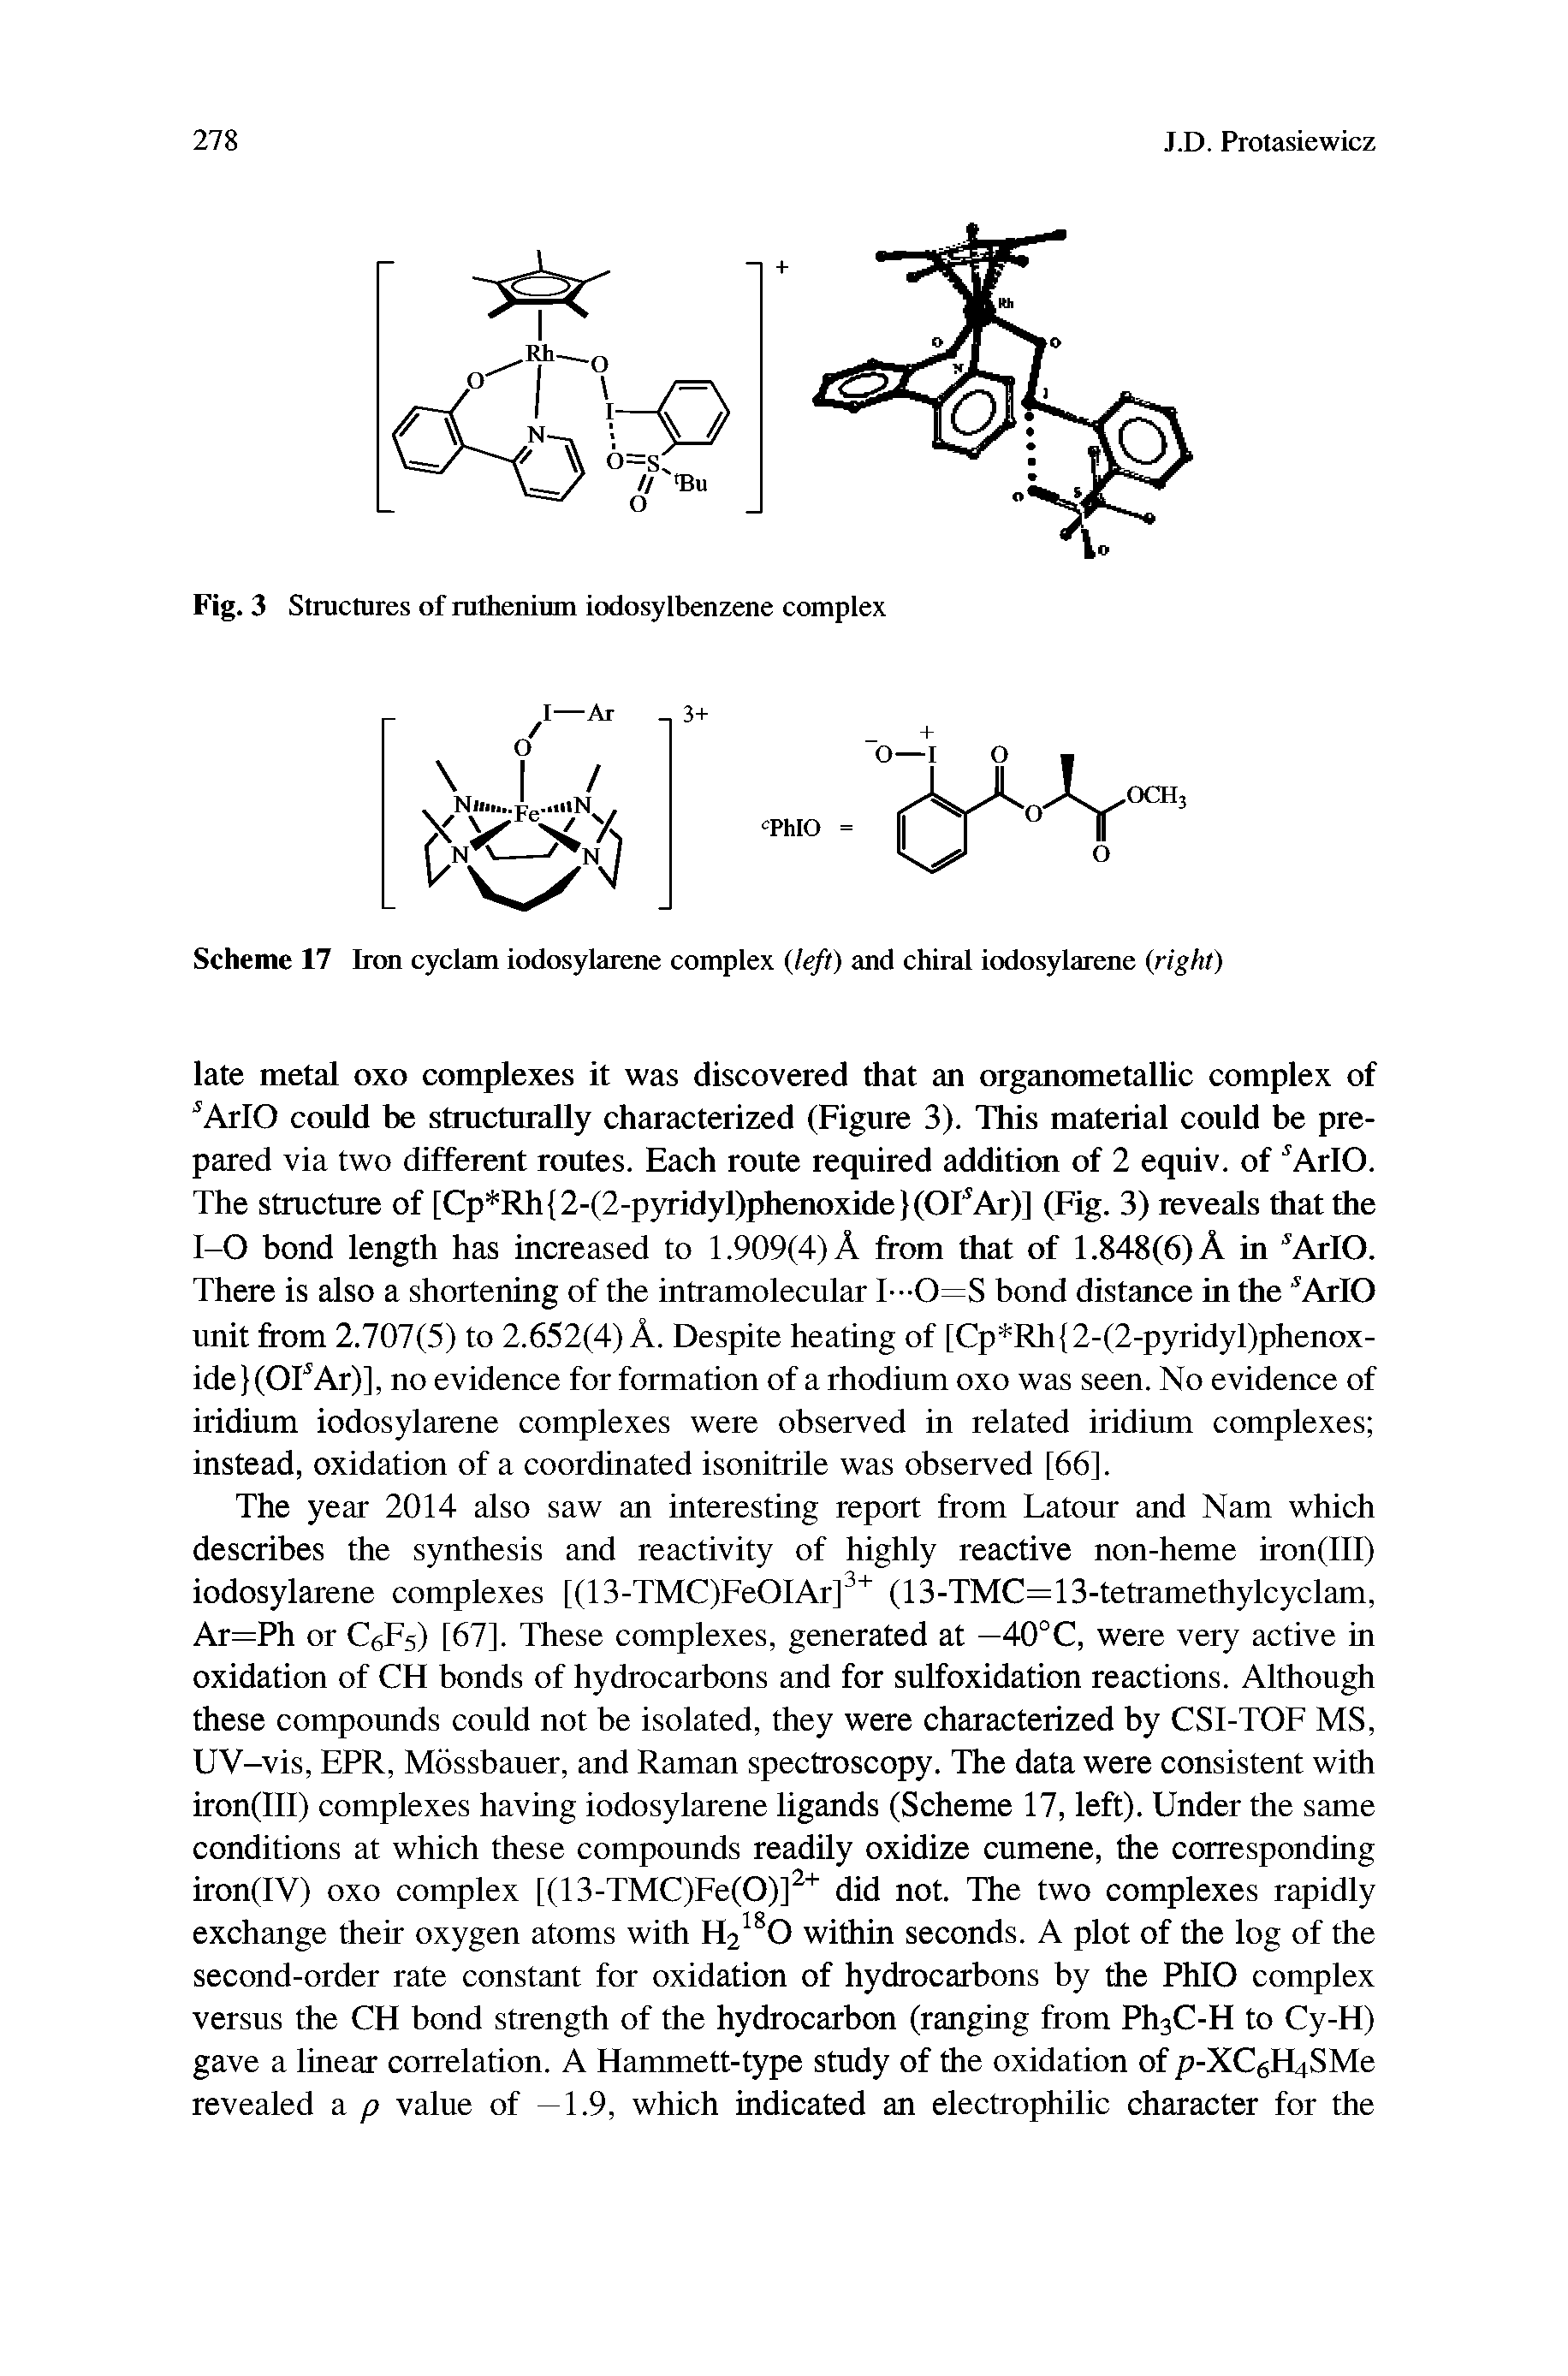 Scheme 17 Iron cyclam iodosylarene complex (left) and chiral iodosylarene (right)...